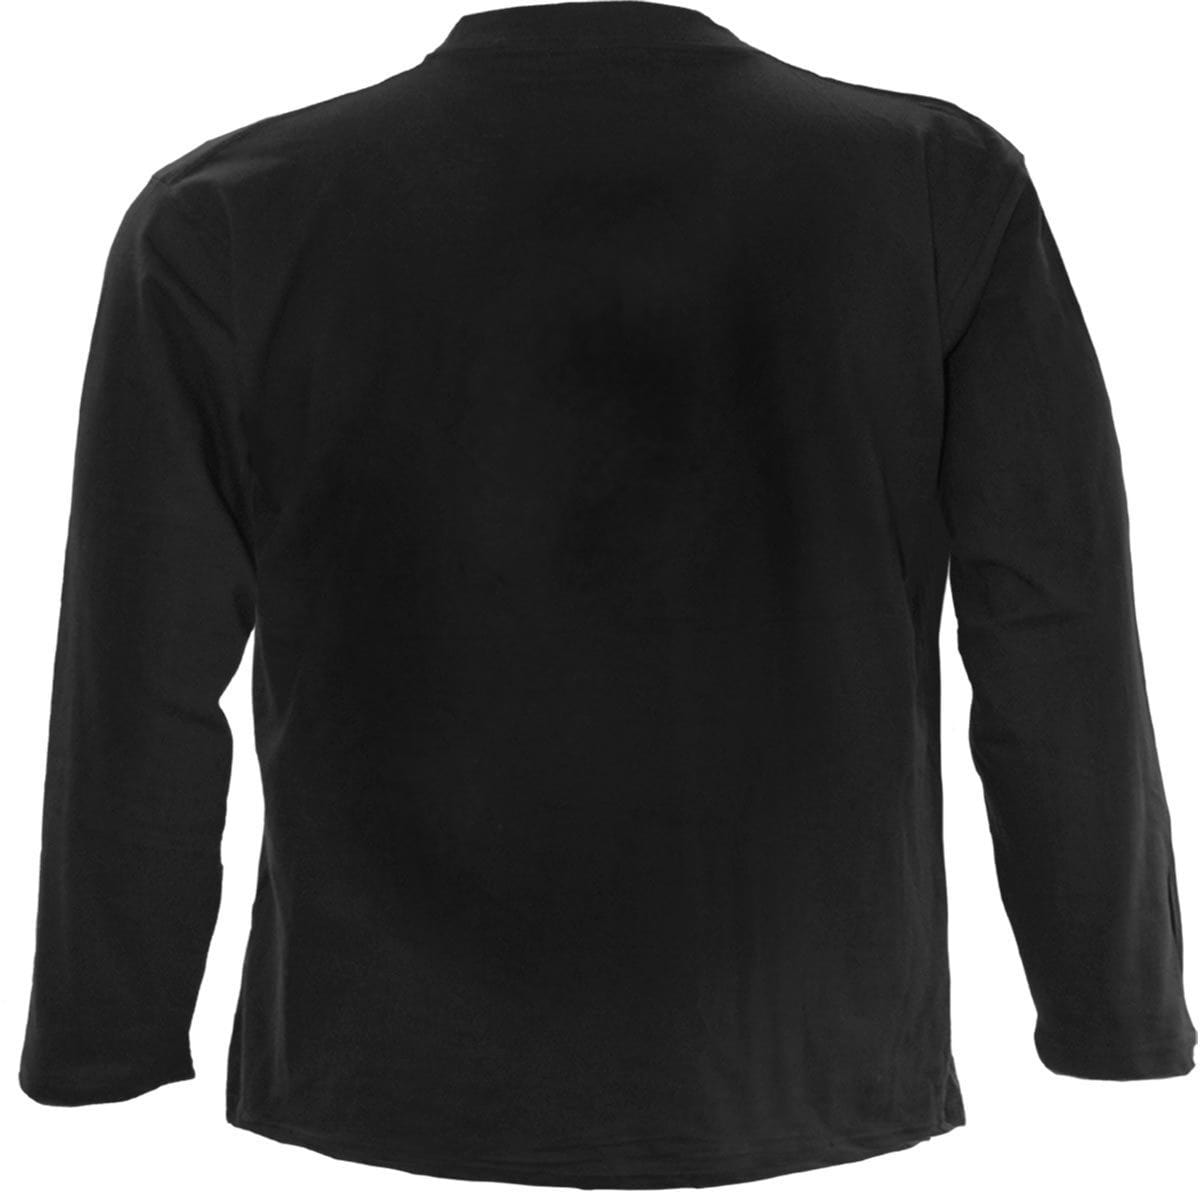 URBAN FASHION - Longsleeve T-Shirt Black - Spiral USA